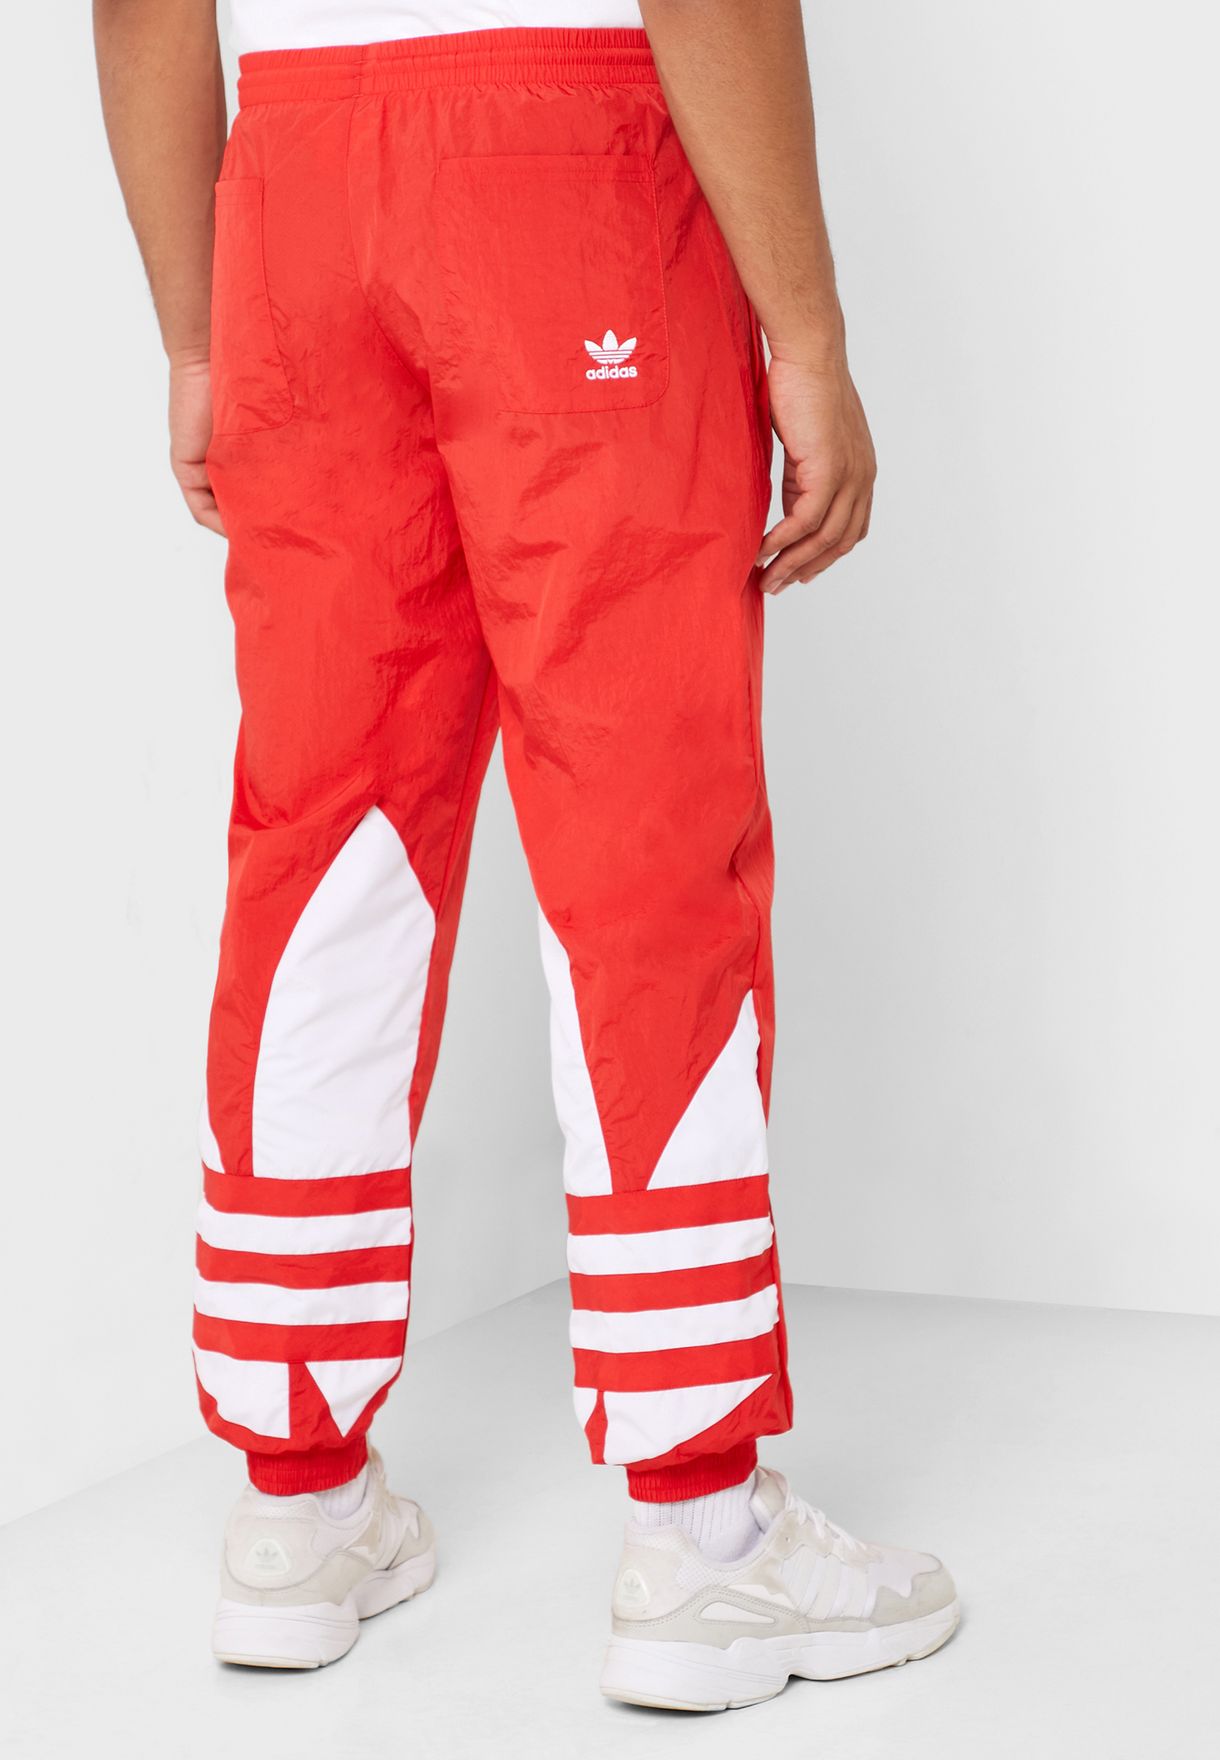 Buy adidas Originals red Big Trefoil 